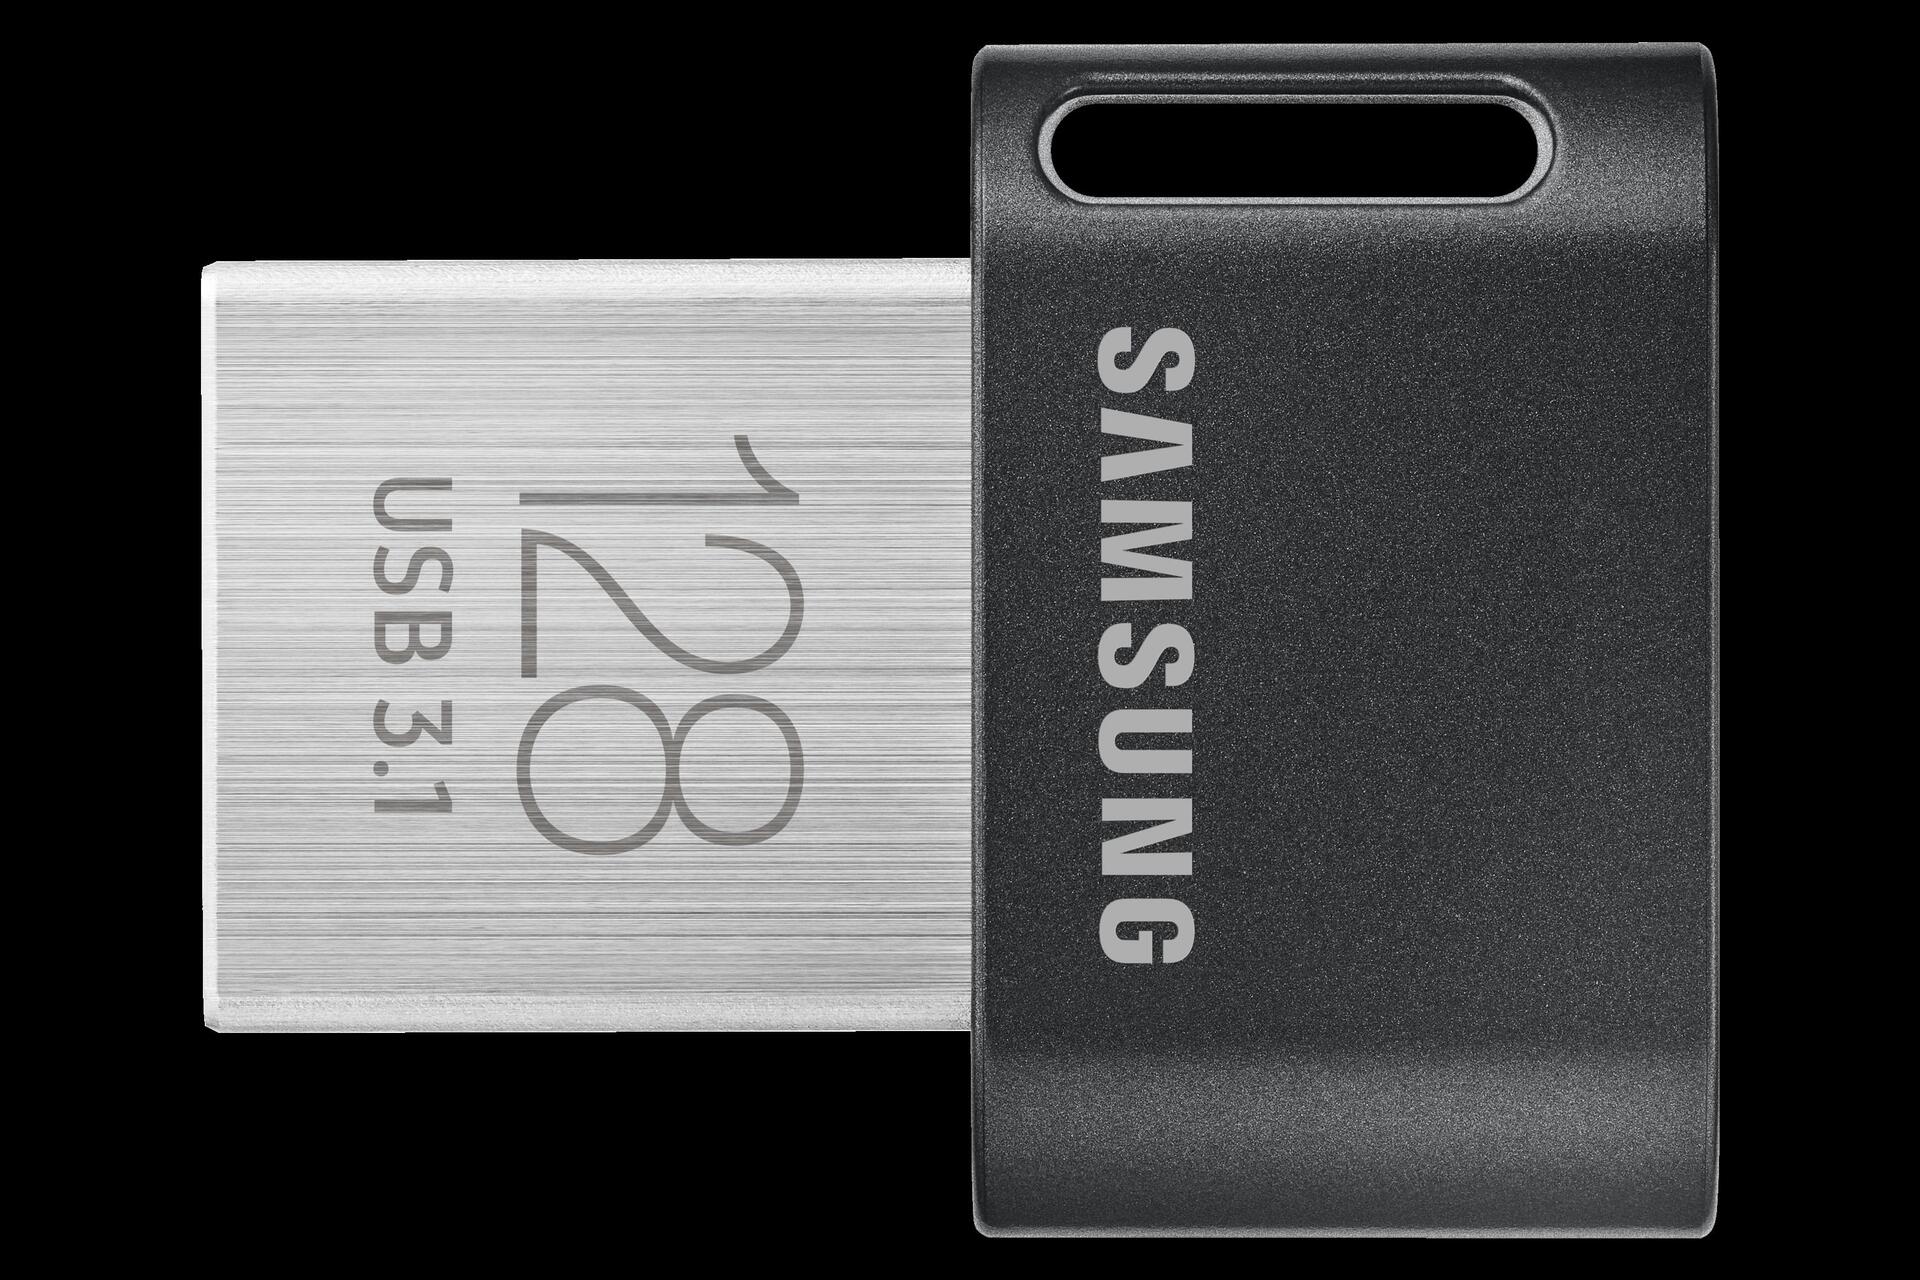 SAMSUNG FIT PLUS 128GB USB 3.1 (MUF-128AB/APC)